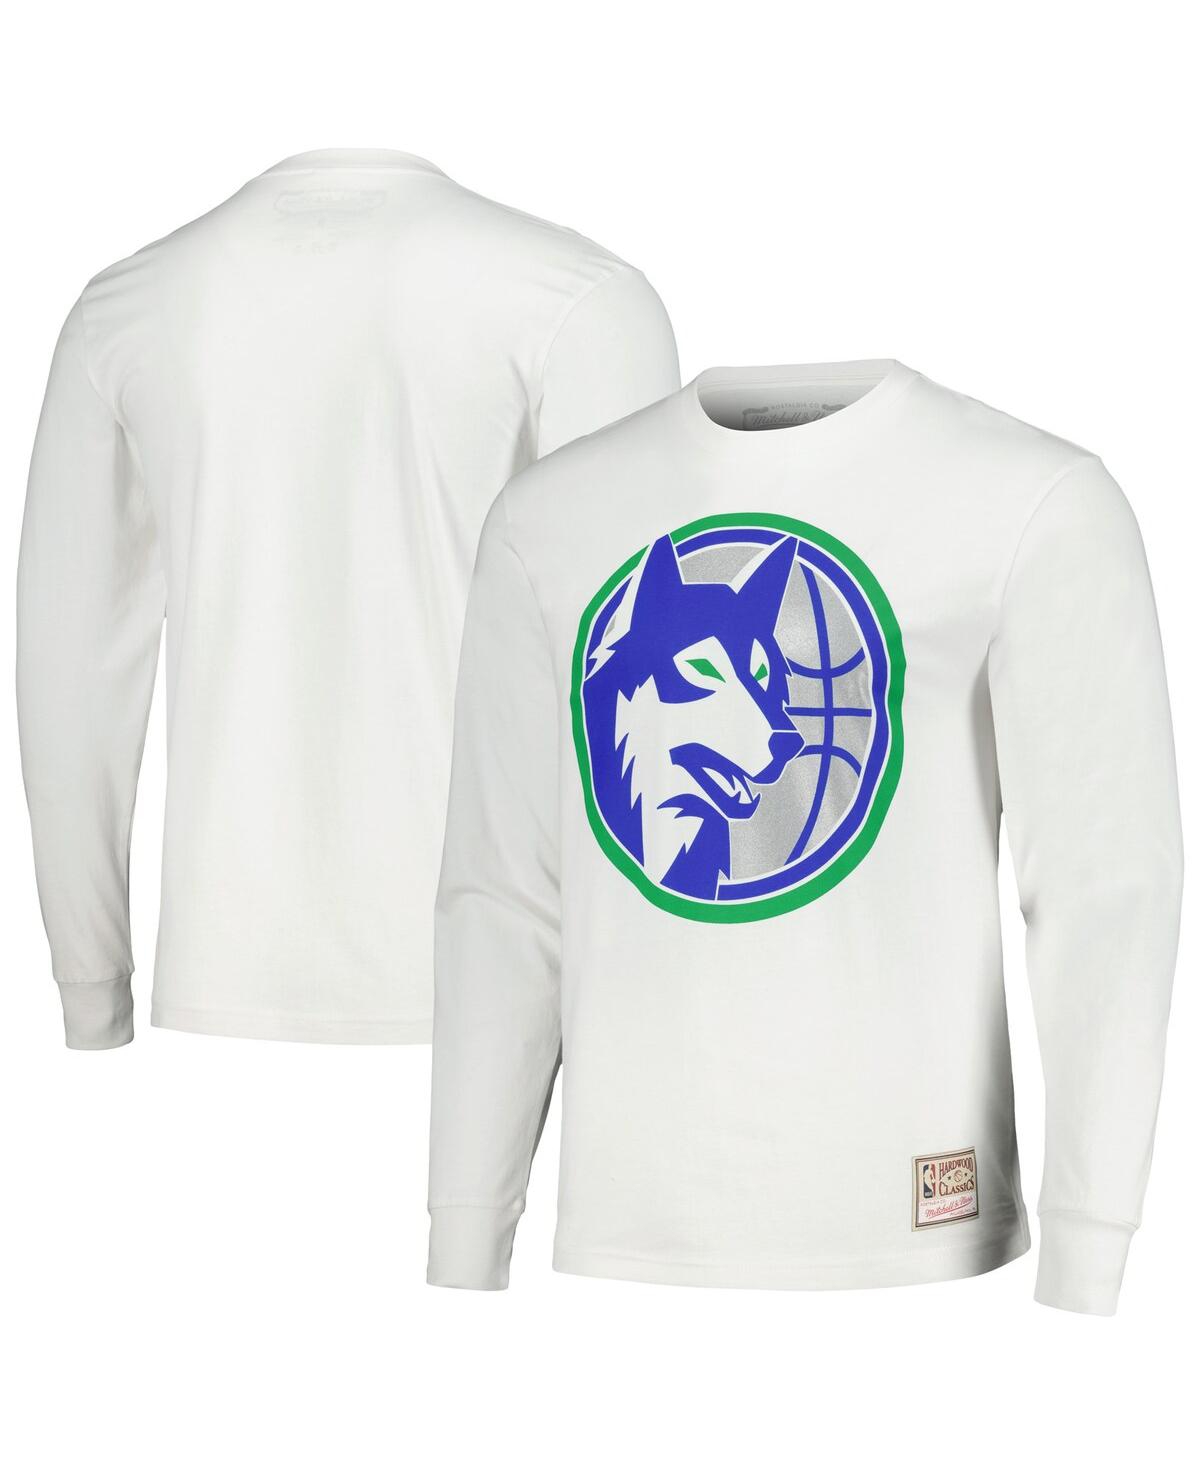 Men's and Women's Mitchell & Ness White Minnesota Timberwolves Hardwood Classics Long Sleeve T-shirt - White